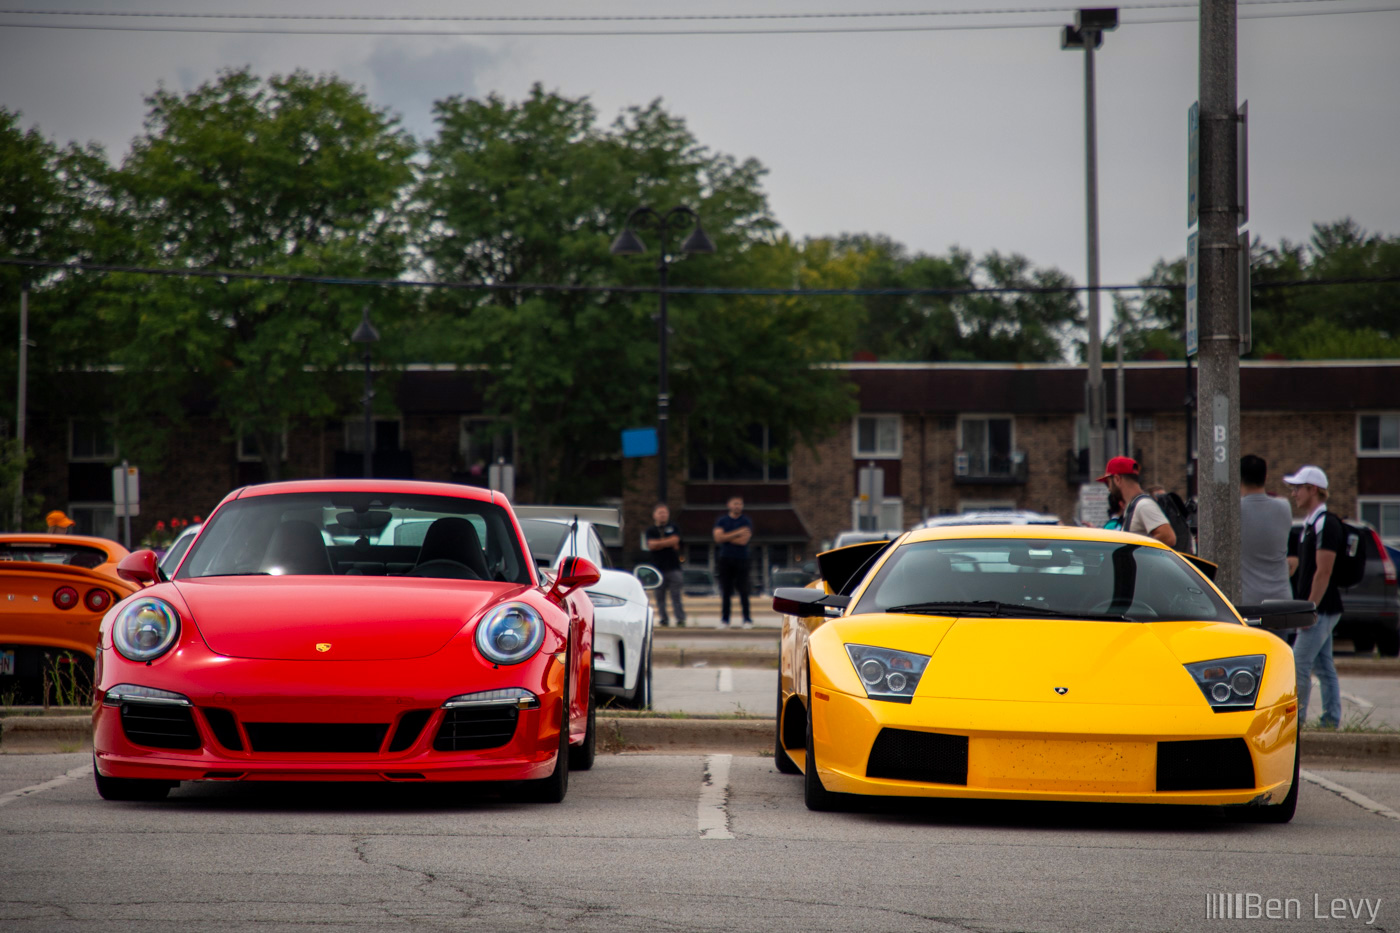 Front of Porsche 911 GTS next to Lamborghini Murcielago